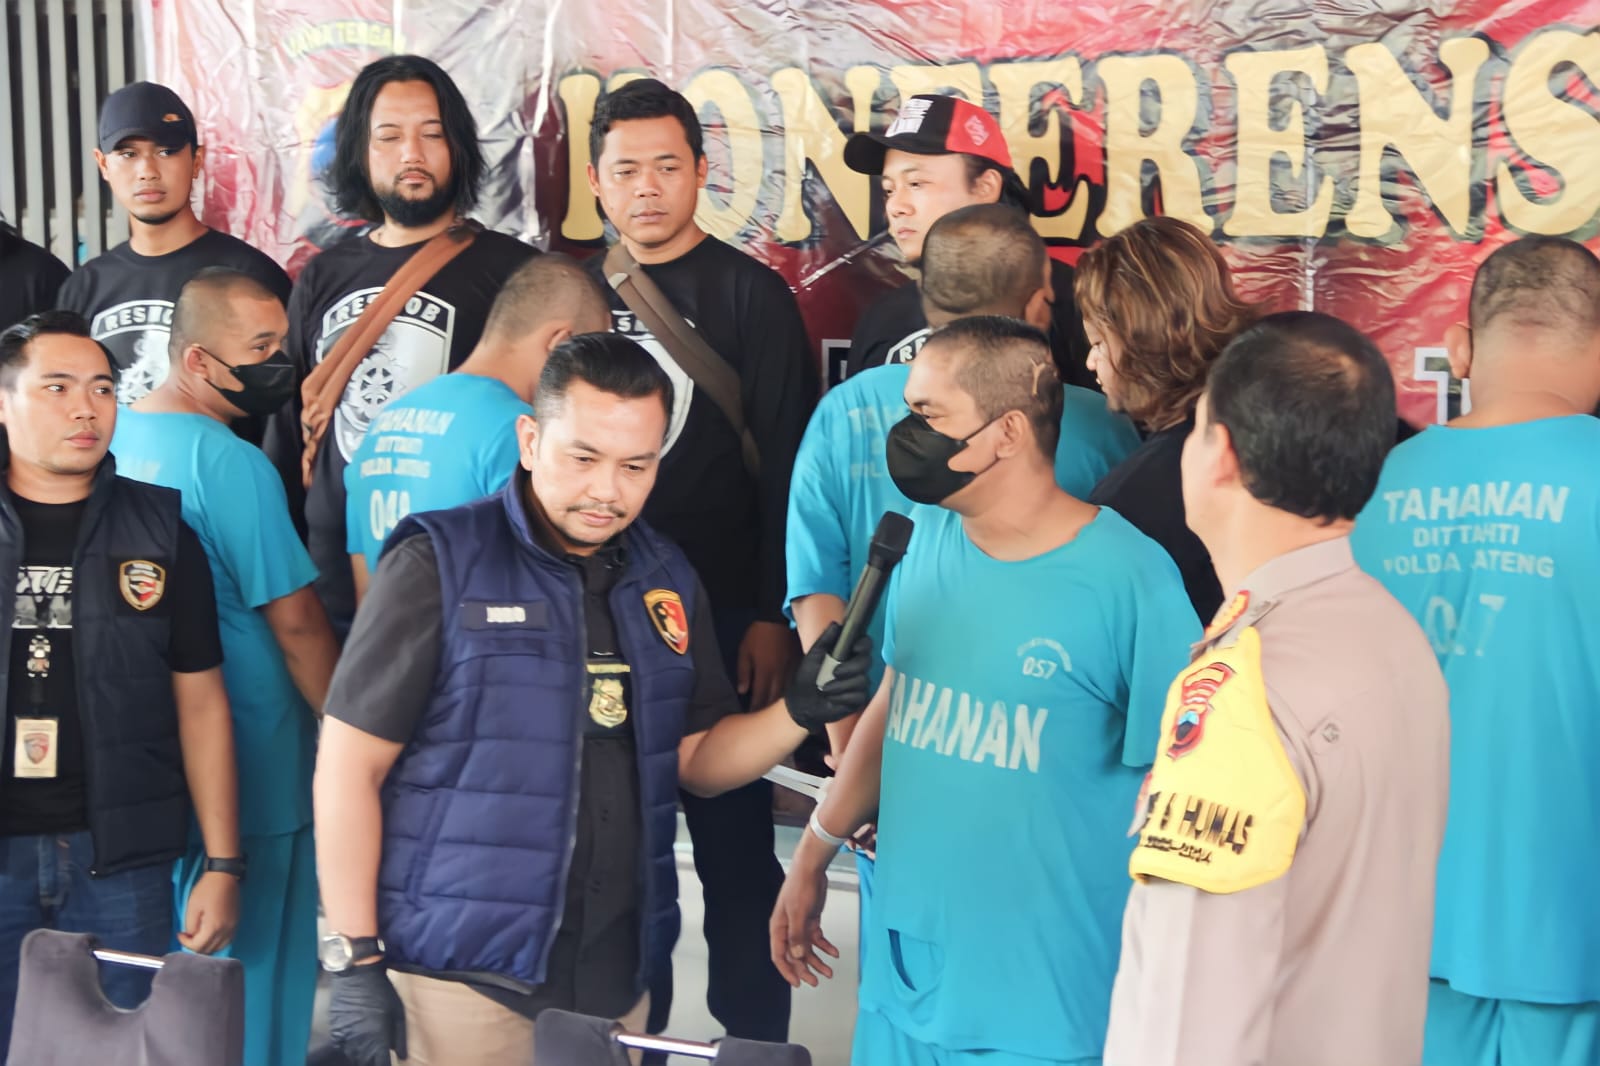 Rampas 5 Mobil Nasabah, 8 Oknum Debt Collector di Semarang Ditangkap Polisi, 4 Orang Lainnya Kabur